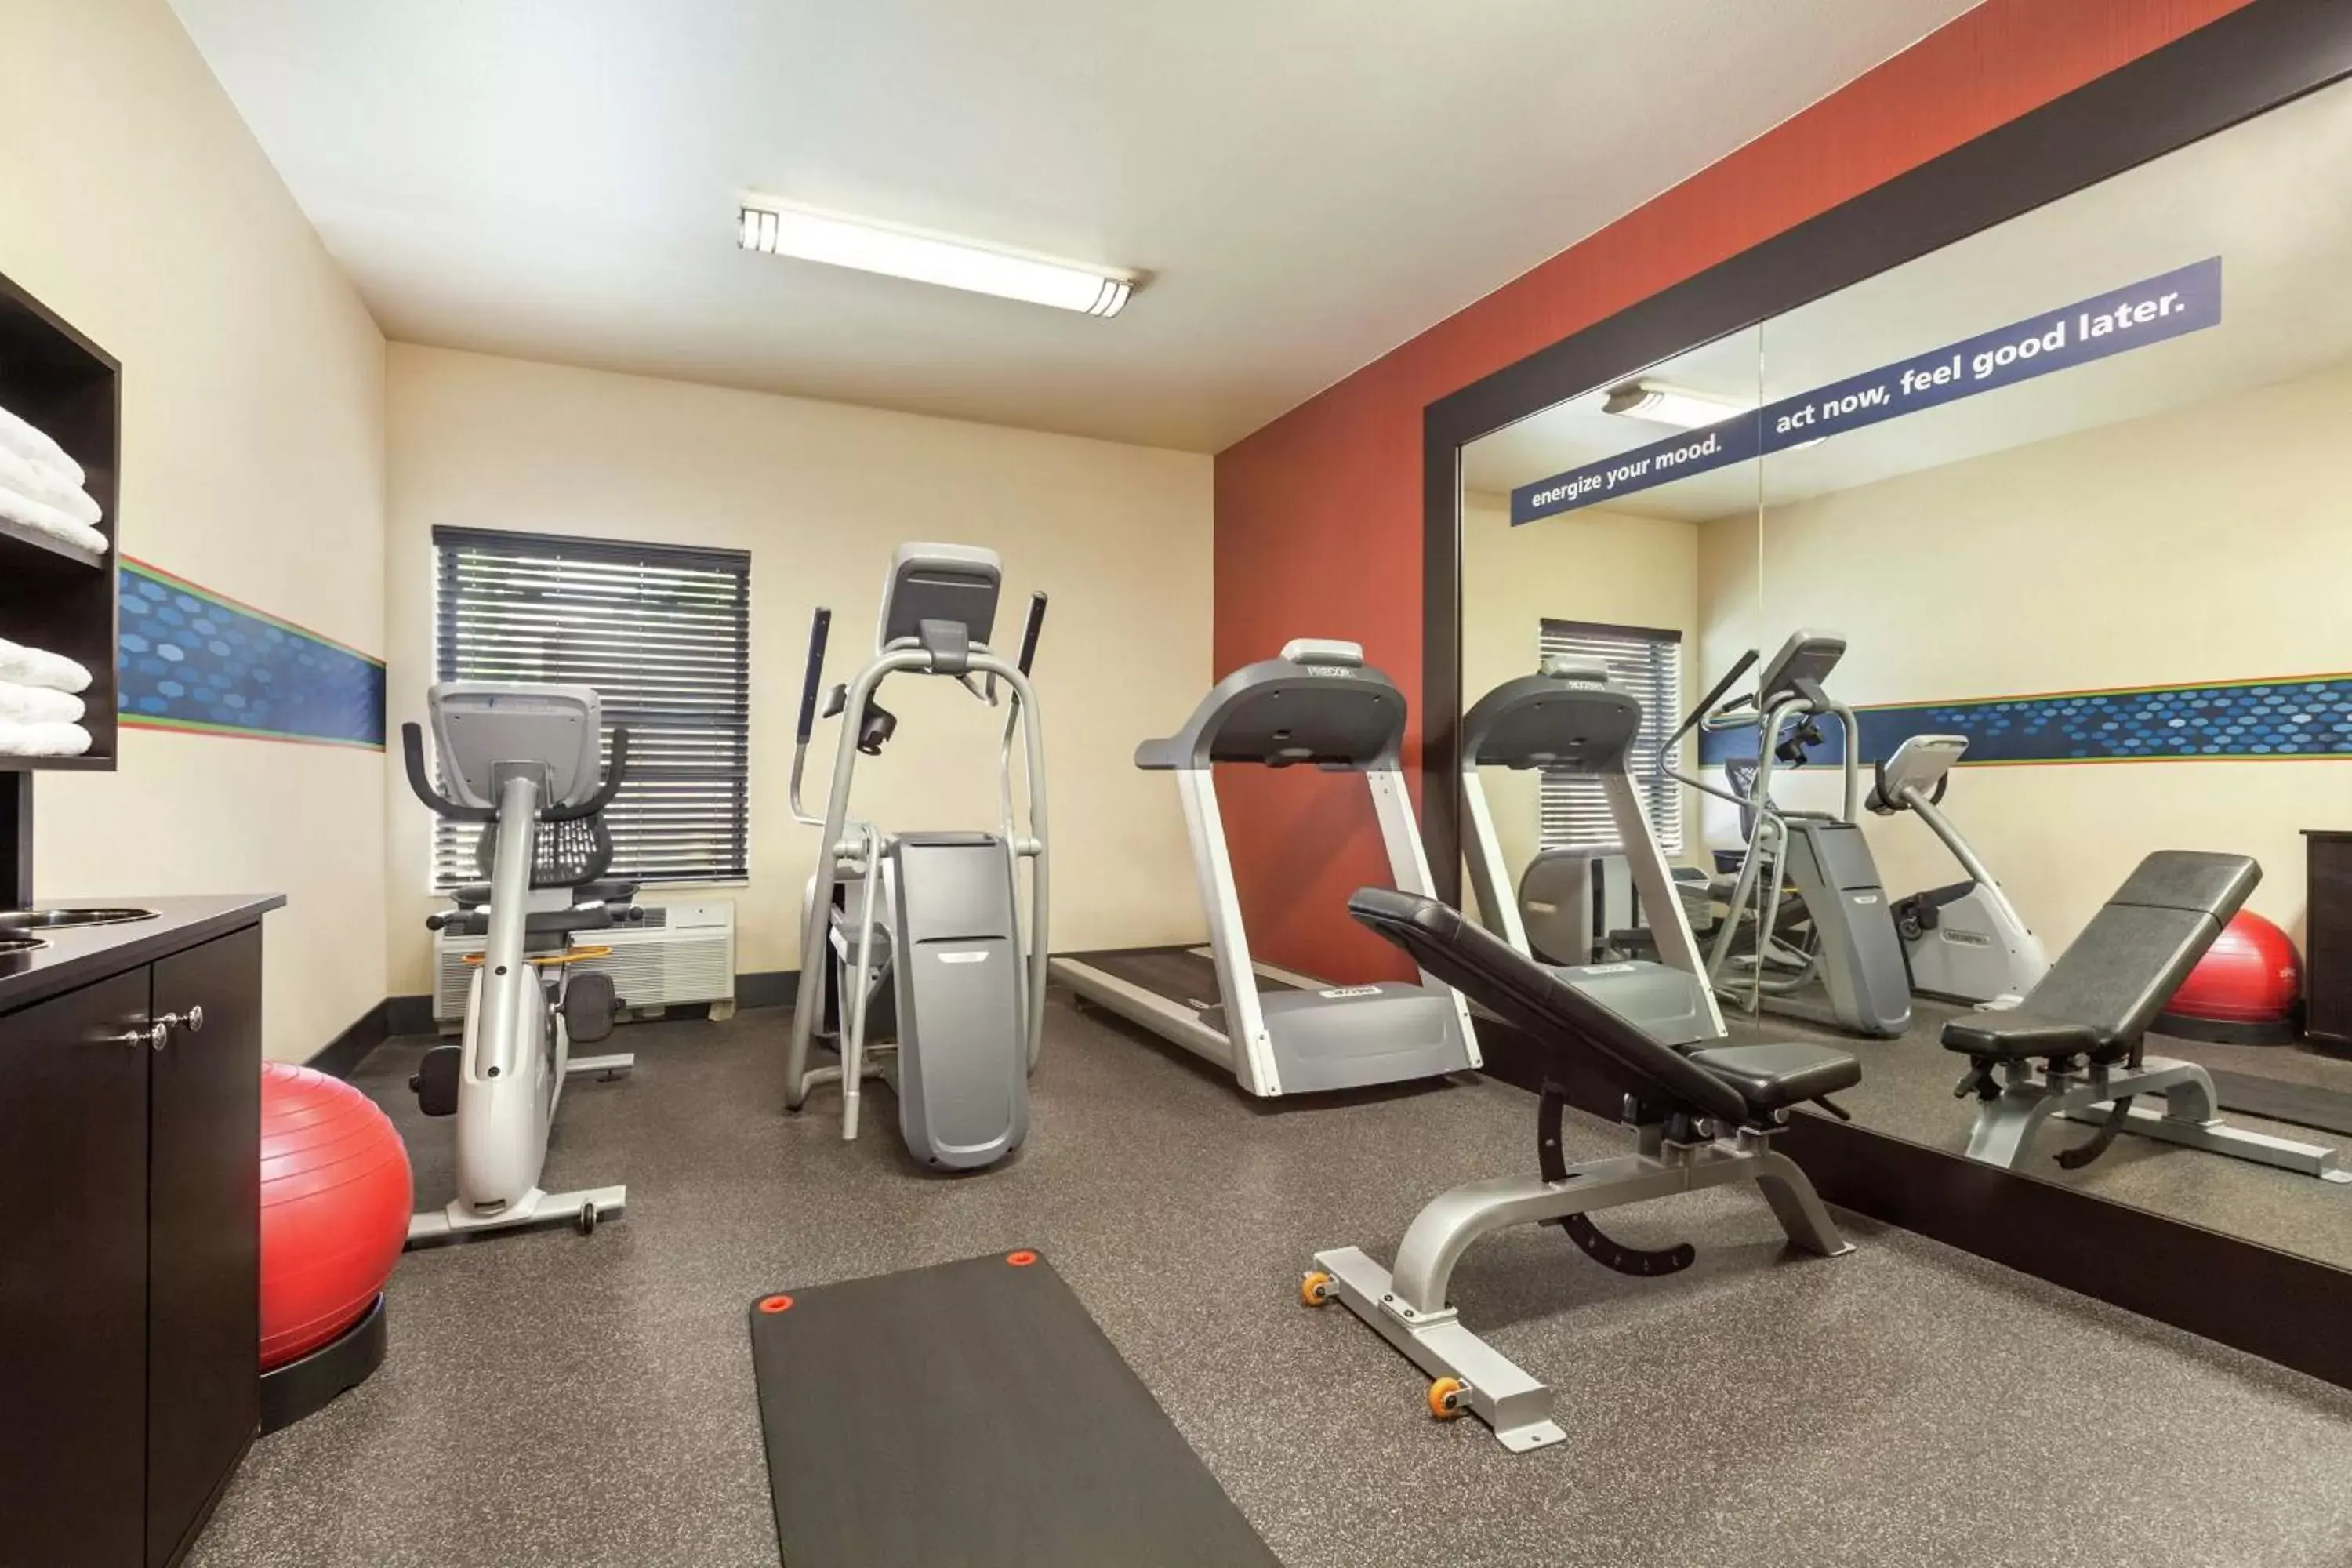 Fitness centre/facilities, Fitness Center/Facilities in Hampton Inn Sacramento/Rancho Cordova